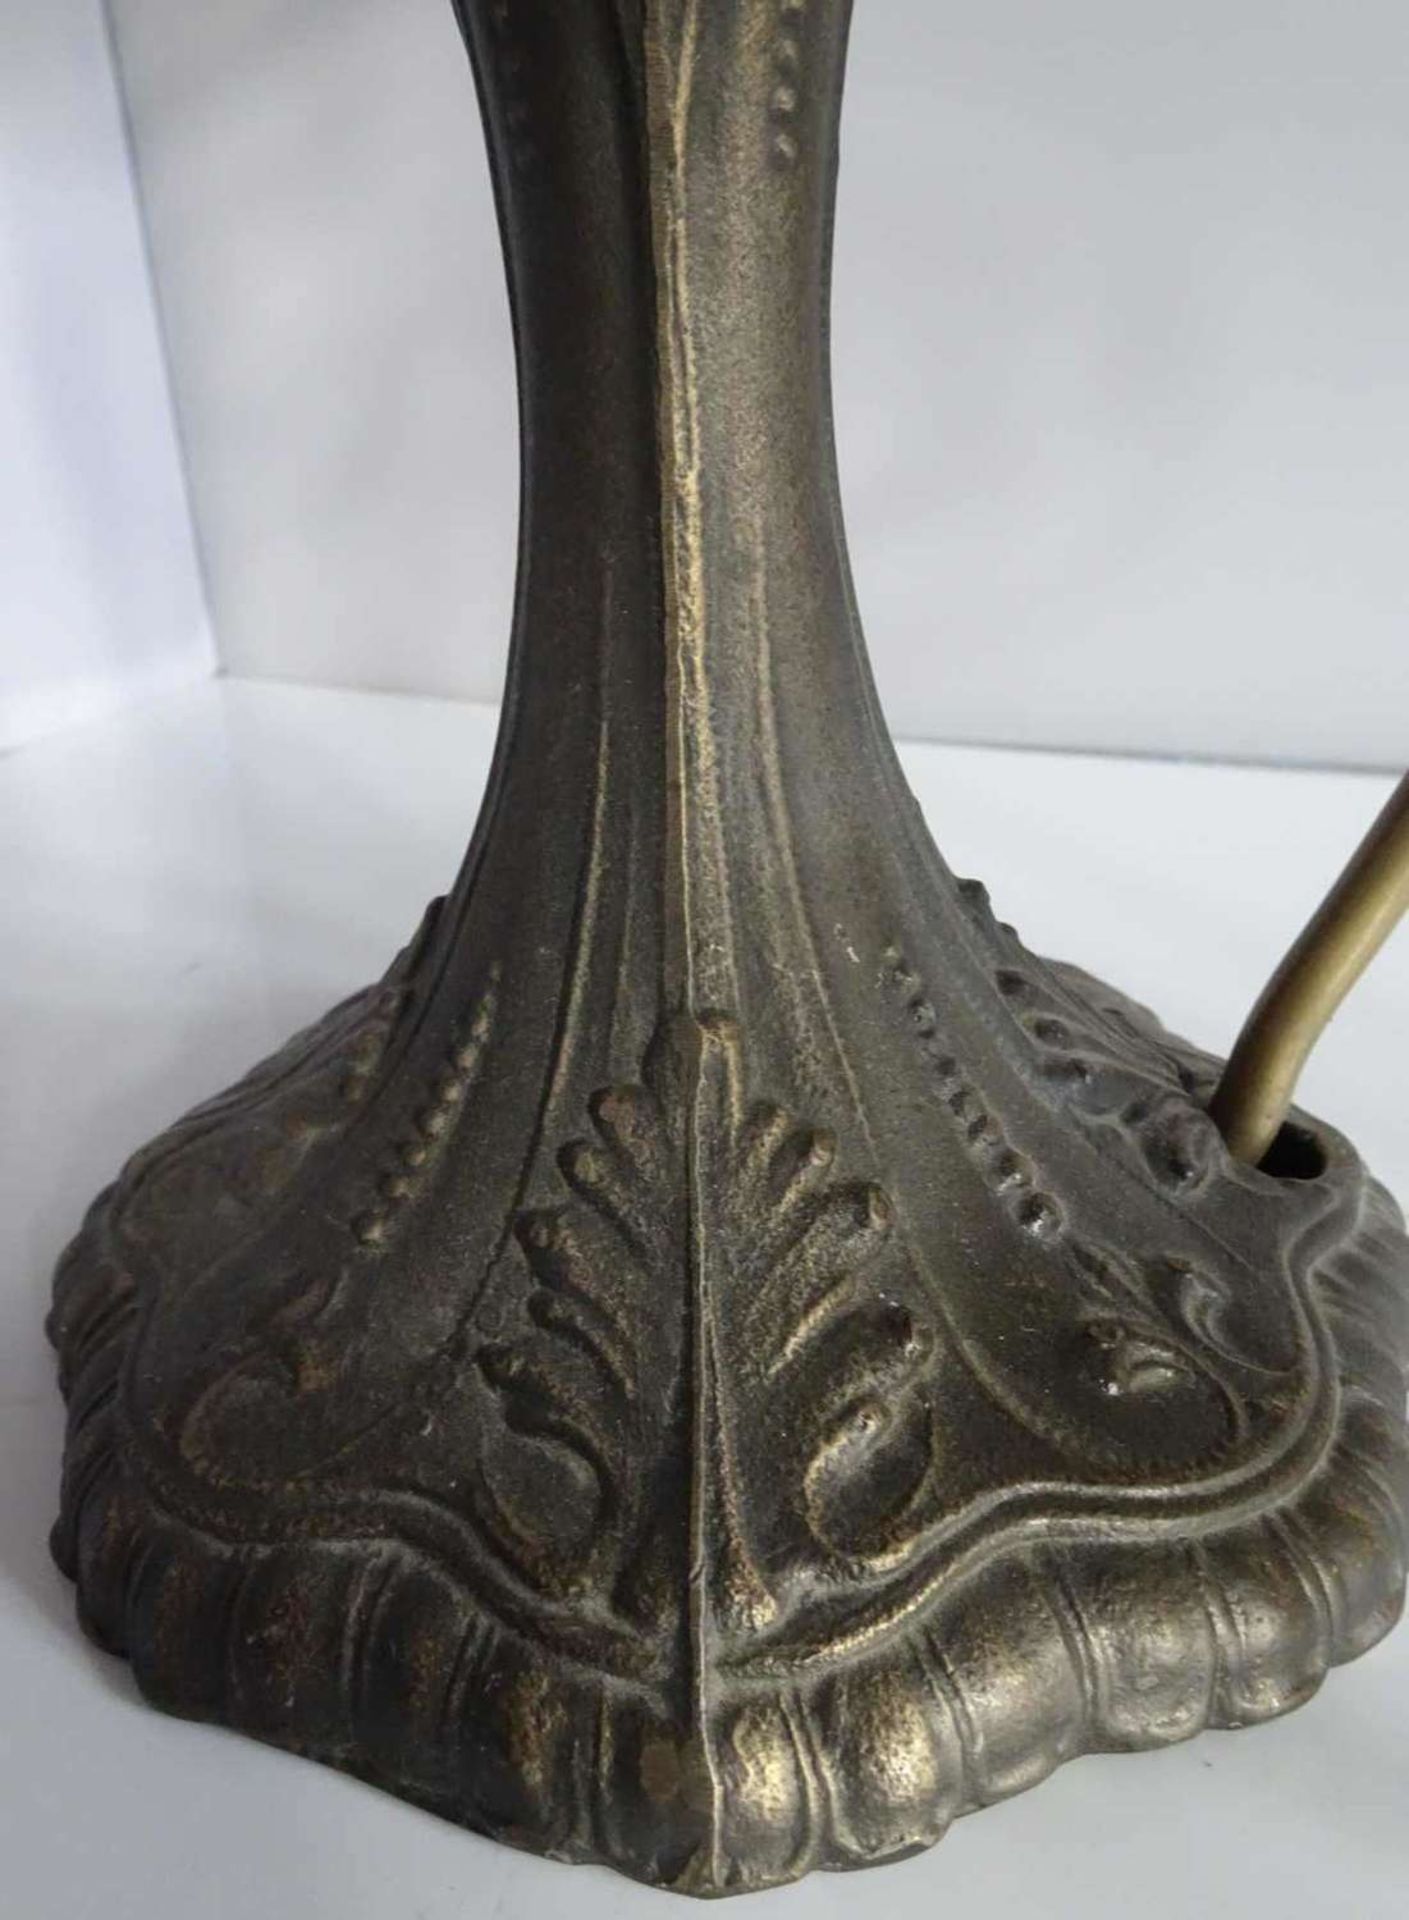 1 Tischlampe im Tiffany Stil. Höhe ca. 42 cm 1 Tiffany style table lamp. Height approx. 42 cm - Bild 3 aus 3